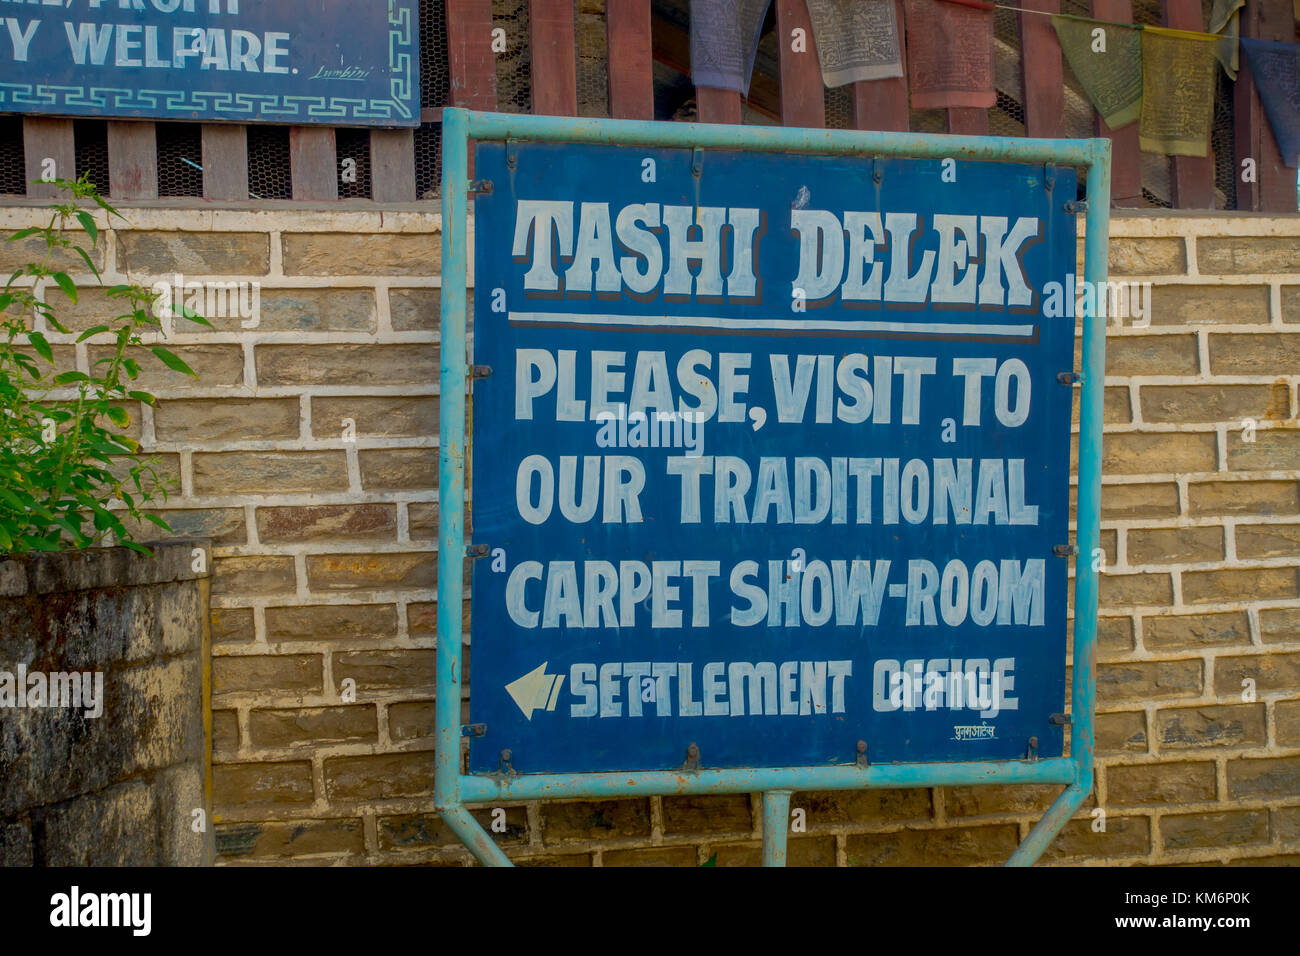 POKHARA, NEPAL - OCTOBER 06 2017: Informative sign of tashi delek, to visit the carpet show room in settlement office in Pokhara, Nepal Stock Photo